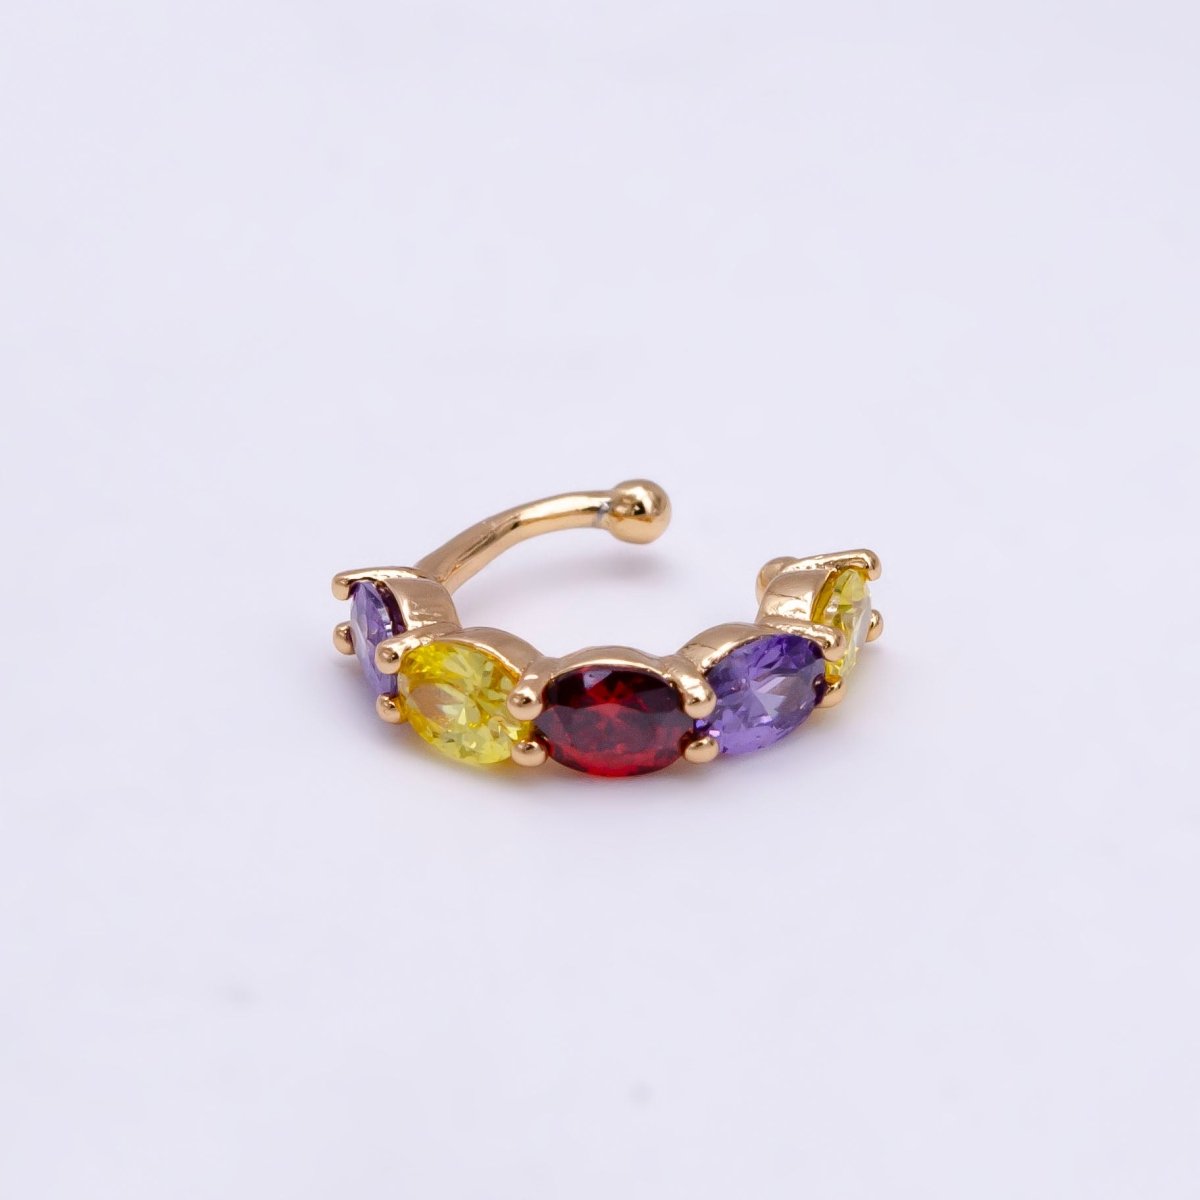 1x Ear cuff no piercing Gold with 8 Different Color cz, ear cuff, minimalist jewelry conch cuff AI-001~AI-008 - DLUXCA